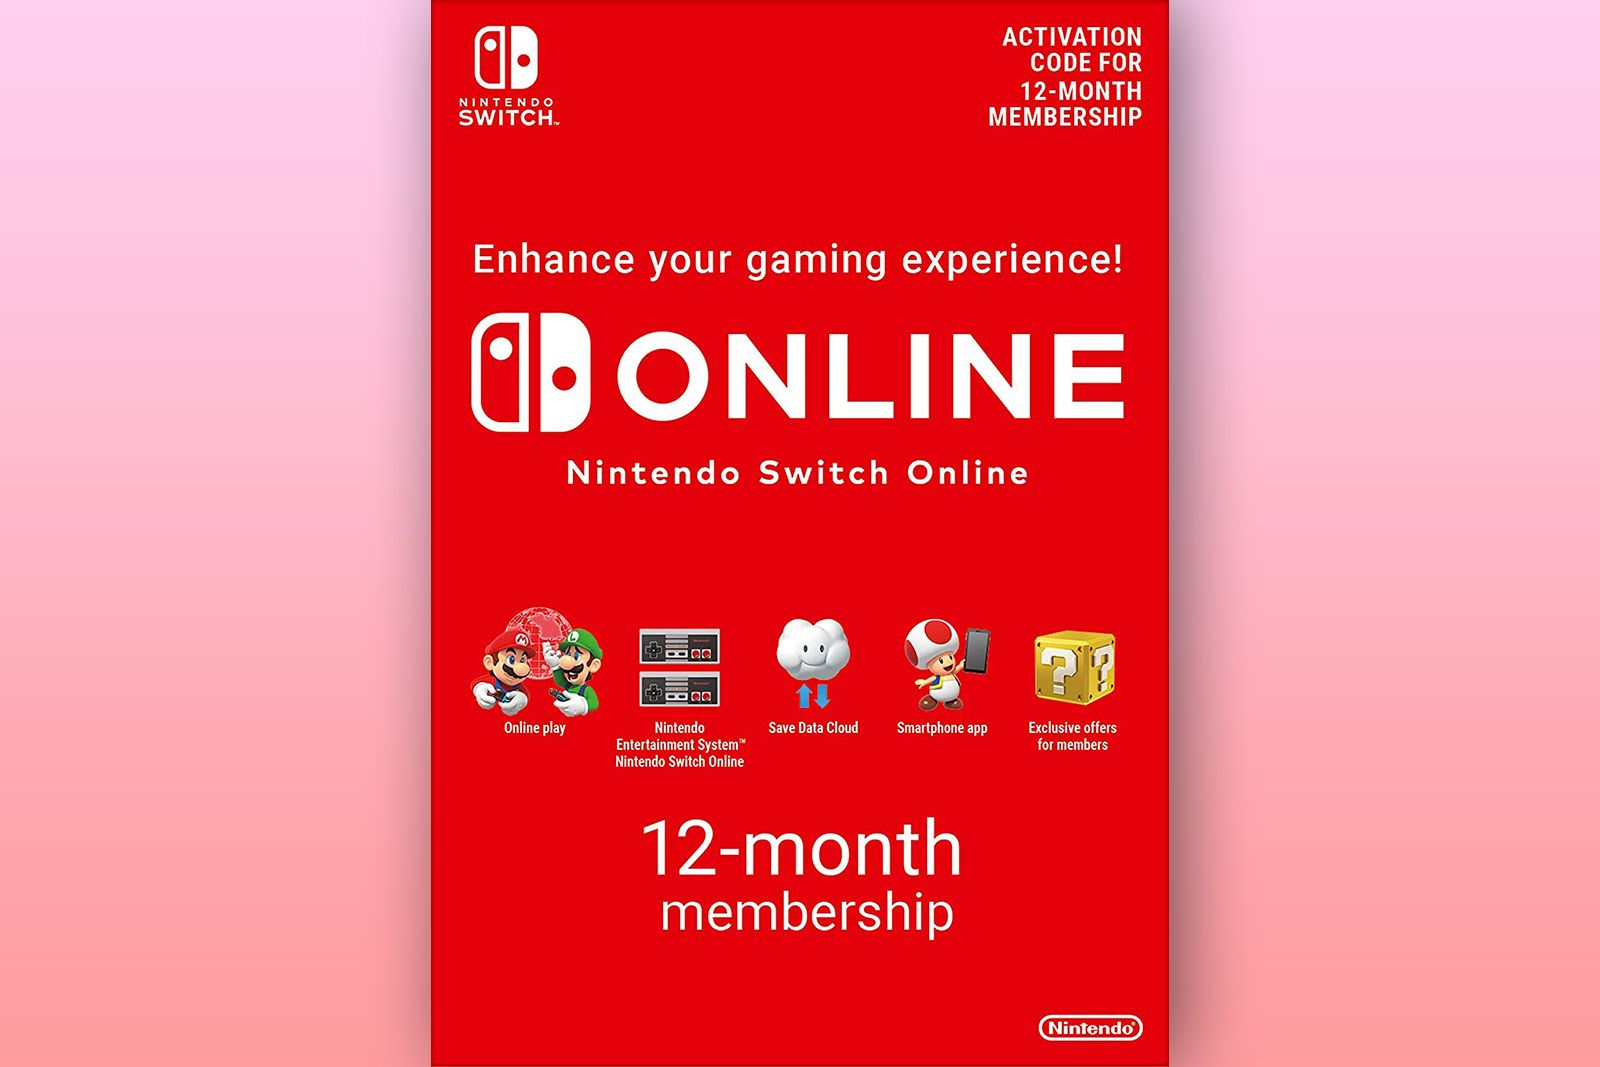 Nintendo Switch Online - 12-month